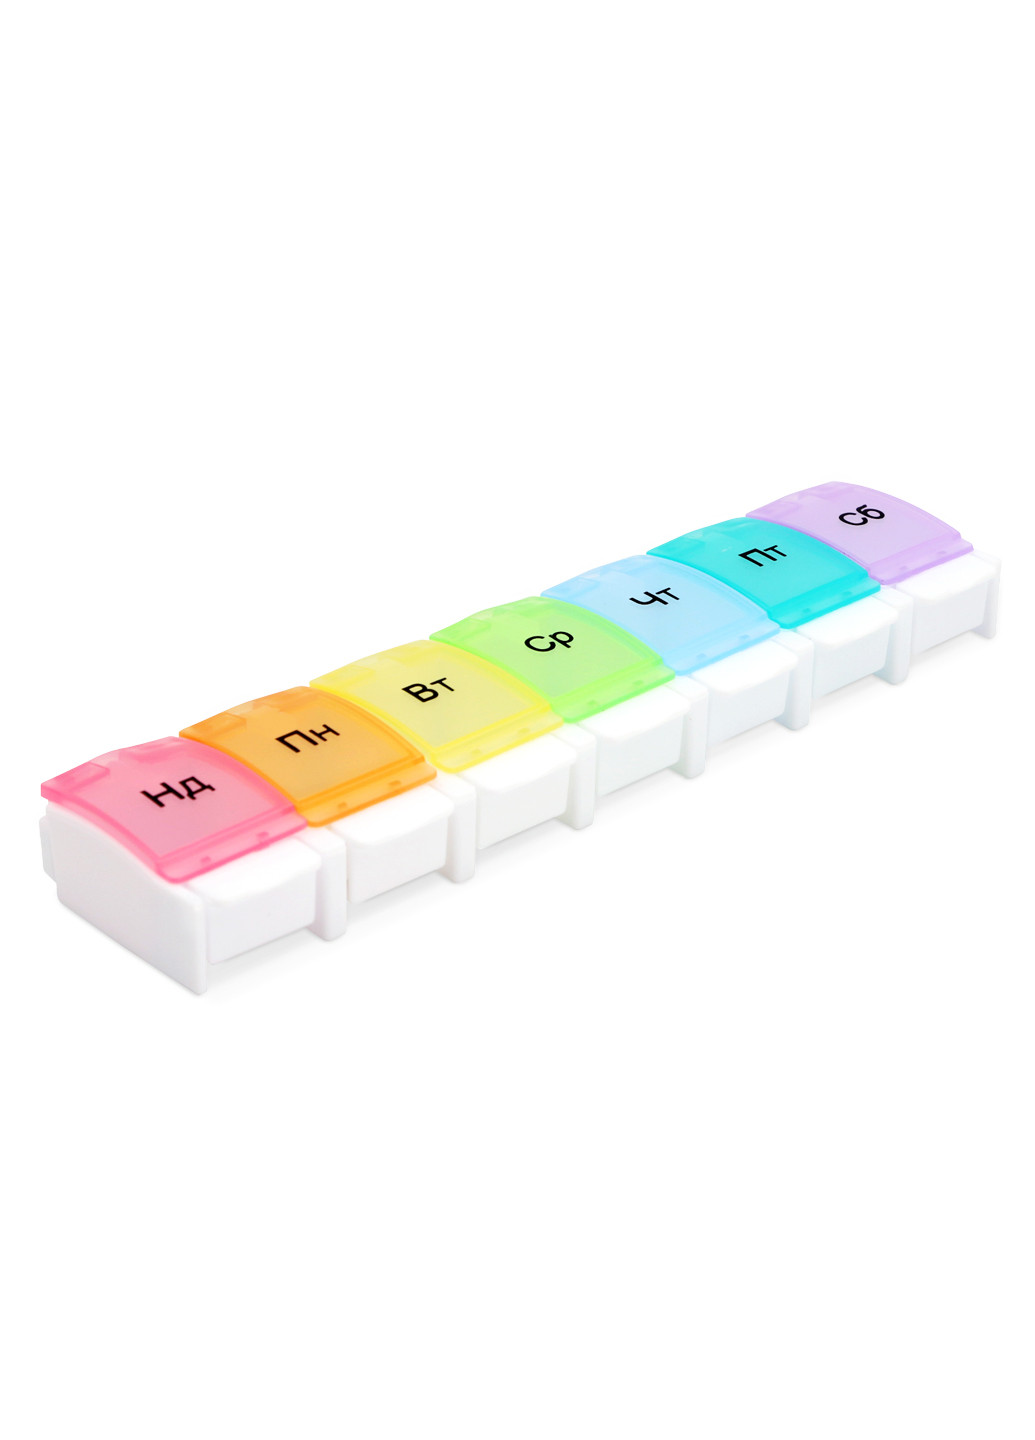 Органайзер для таблеток на 7 дней пластиковый цветной, 22,3х5,2х2,8 см MVM (251103859)